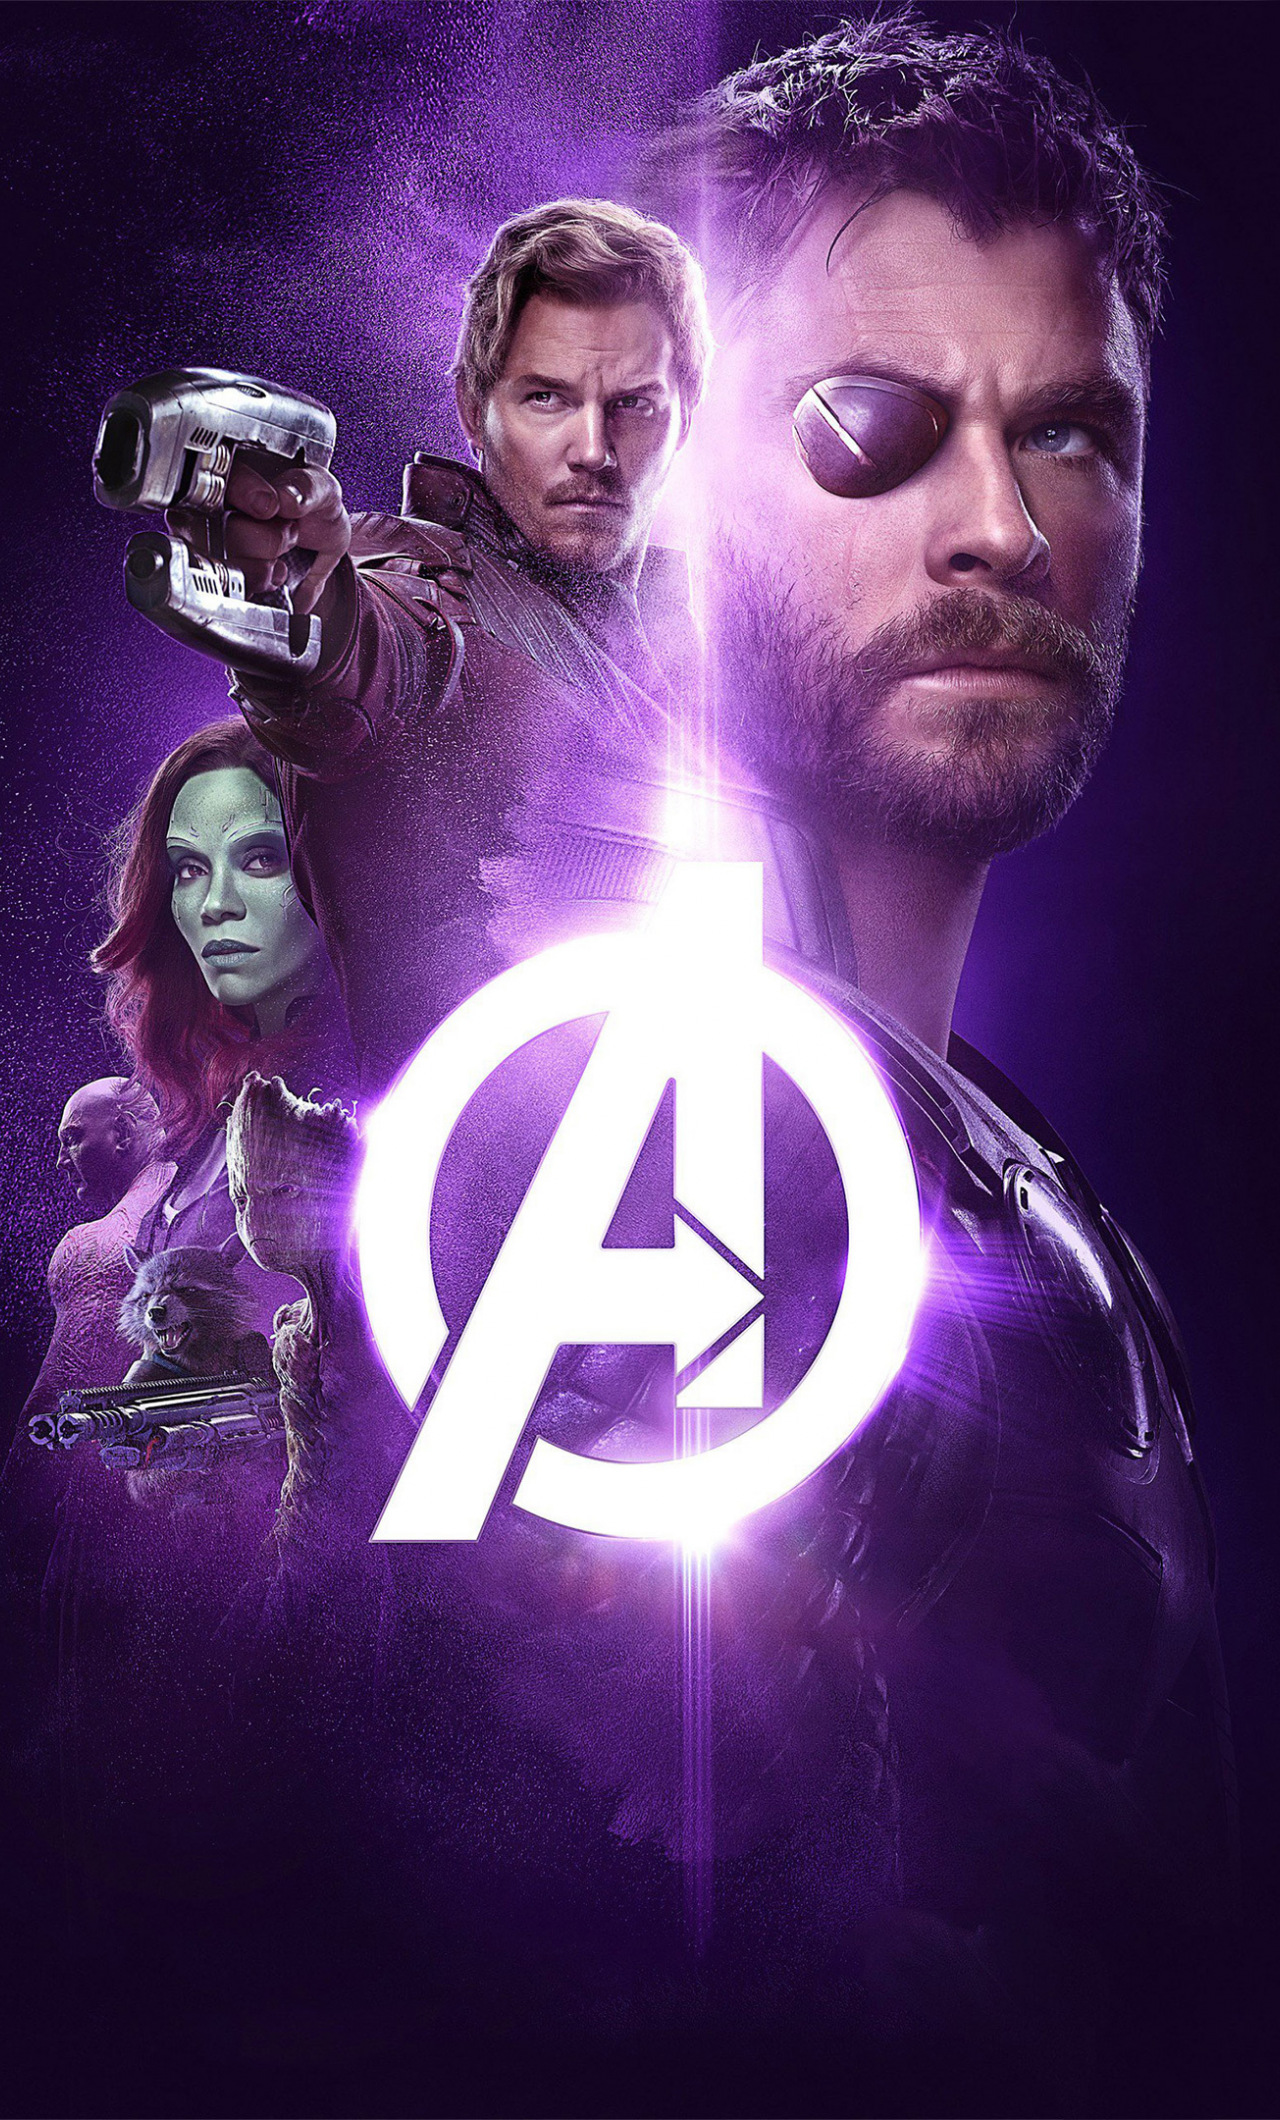 Avengers Infinity War 2018 Power Stone Poster 4k Wallpaper Download High Resolution 4k Wallpaper